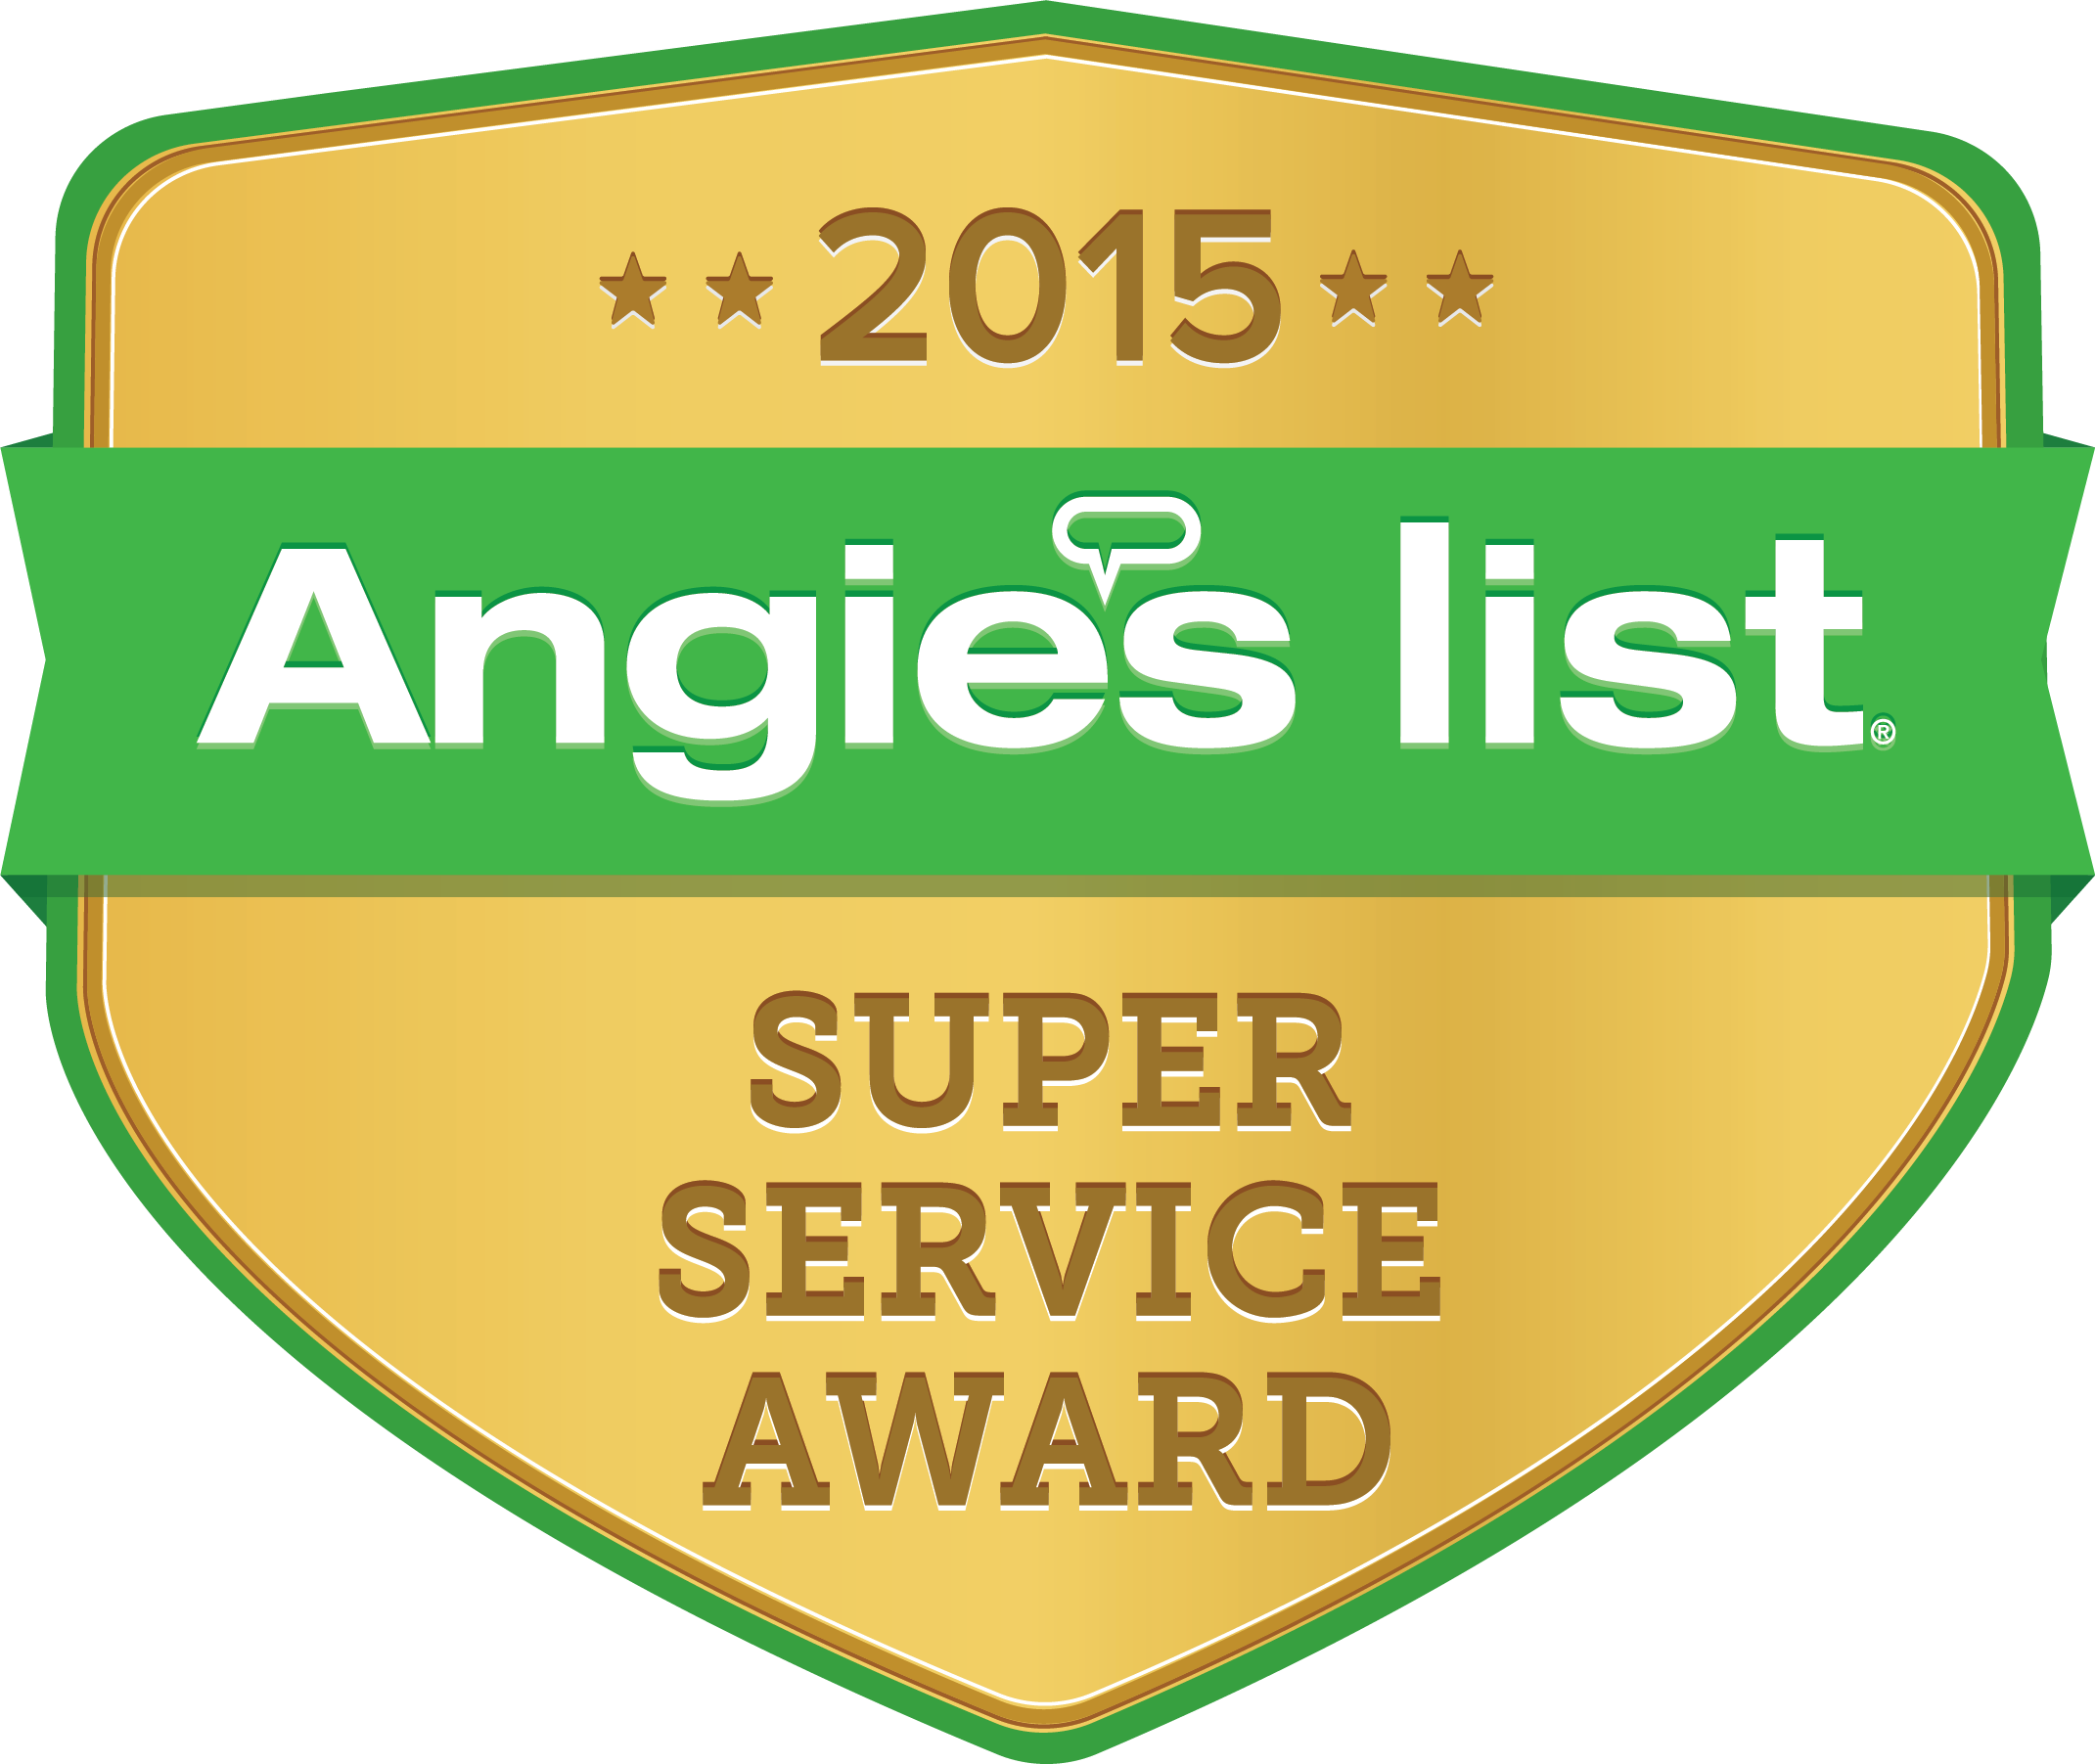 2015 angies list super service award.png